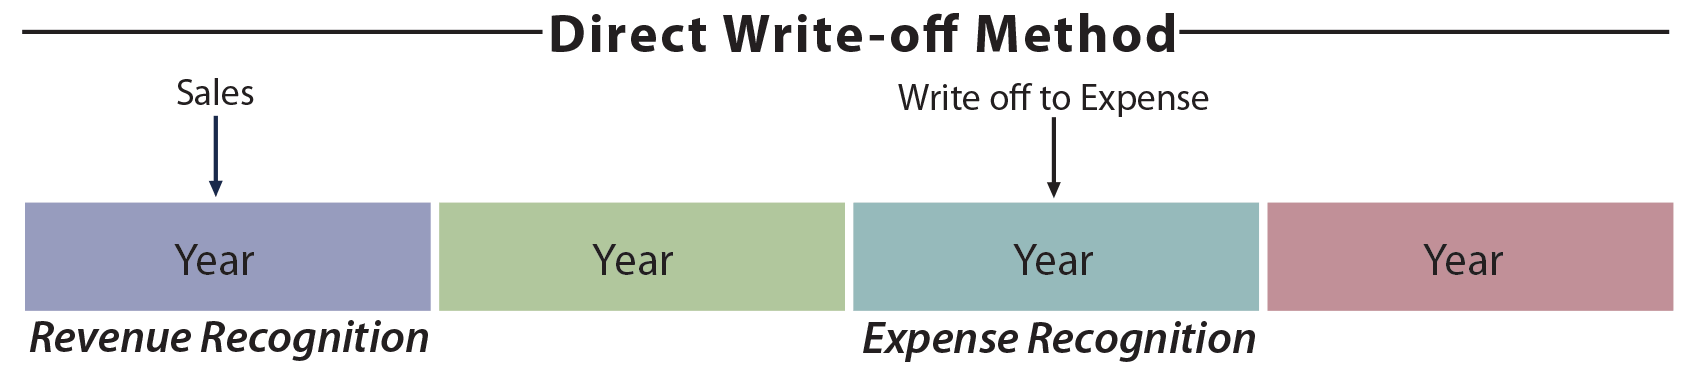 Direct Write-Off Method illustration